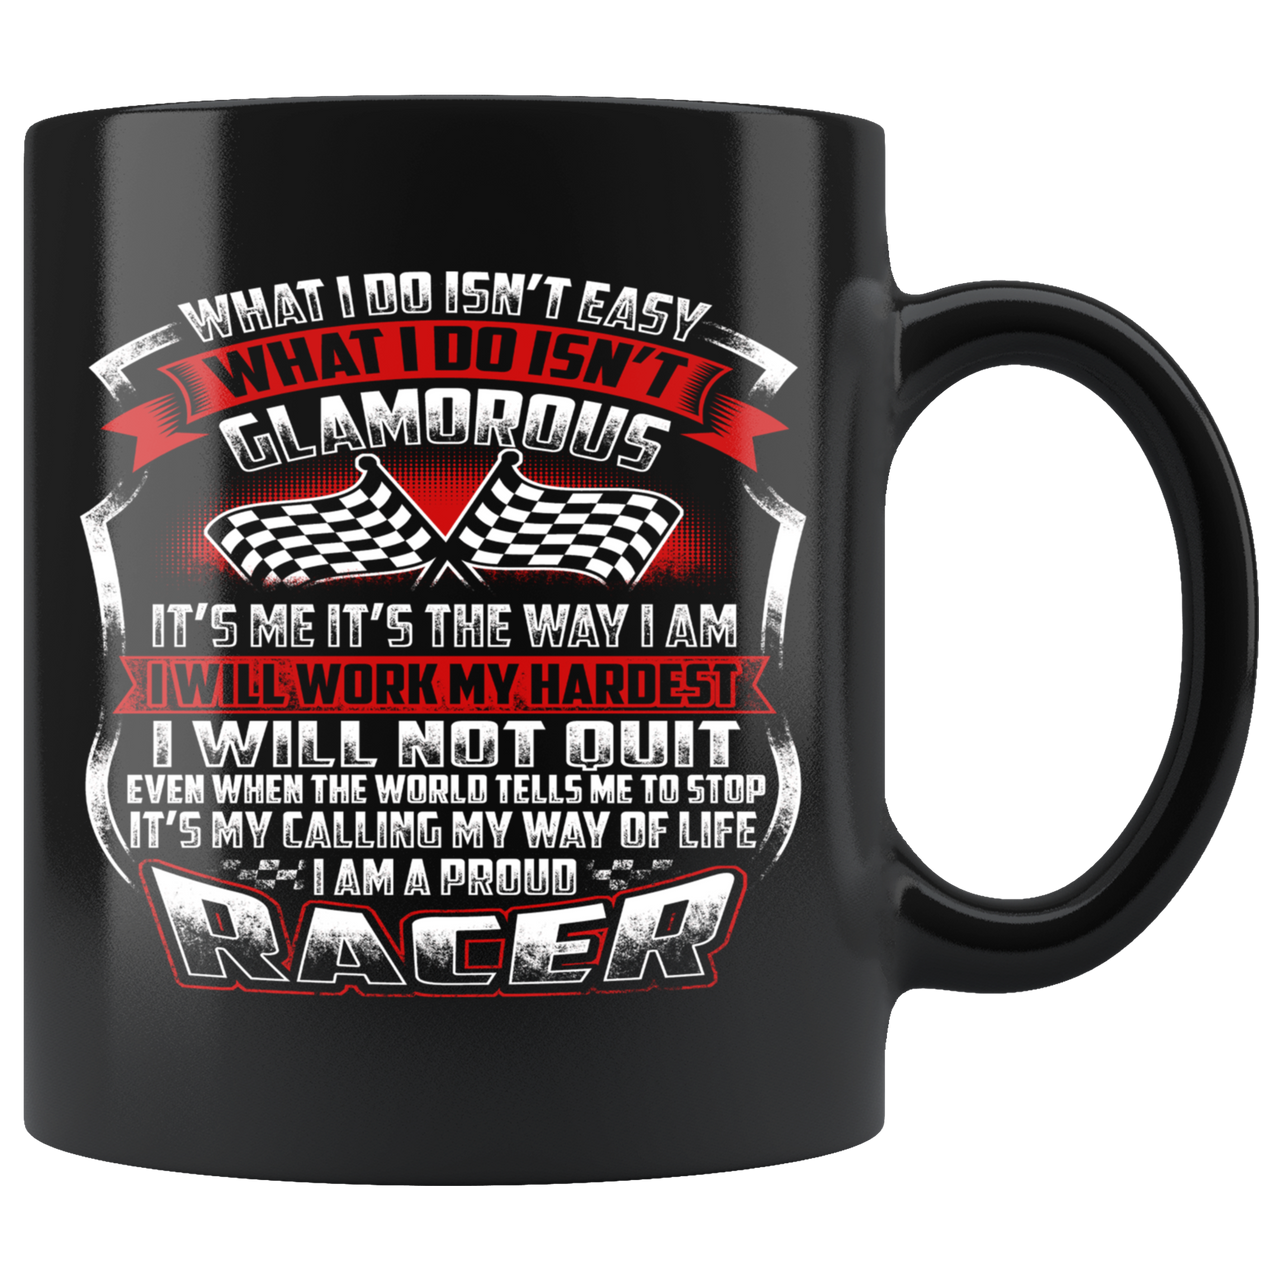 What I Do Isn't Easy What i Do Isn't Glamorous... I'm A Proud Racer Mug!